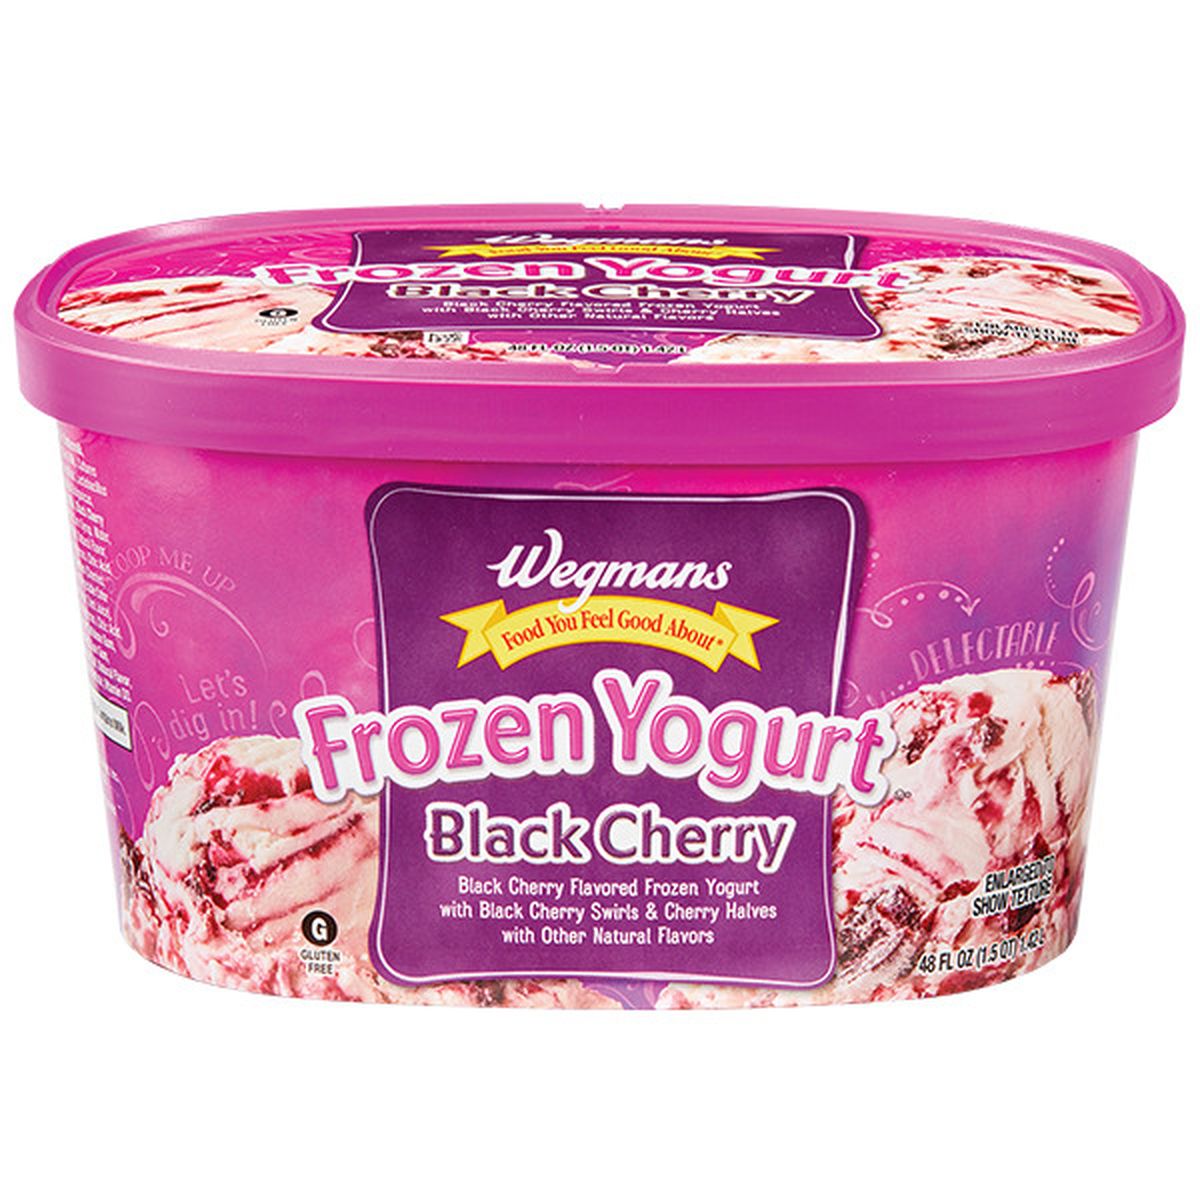 Calories in Wegmans Black Cherry Frozen Yogurt